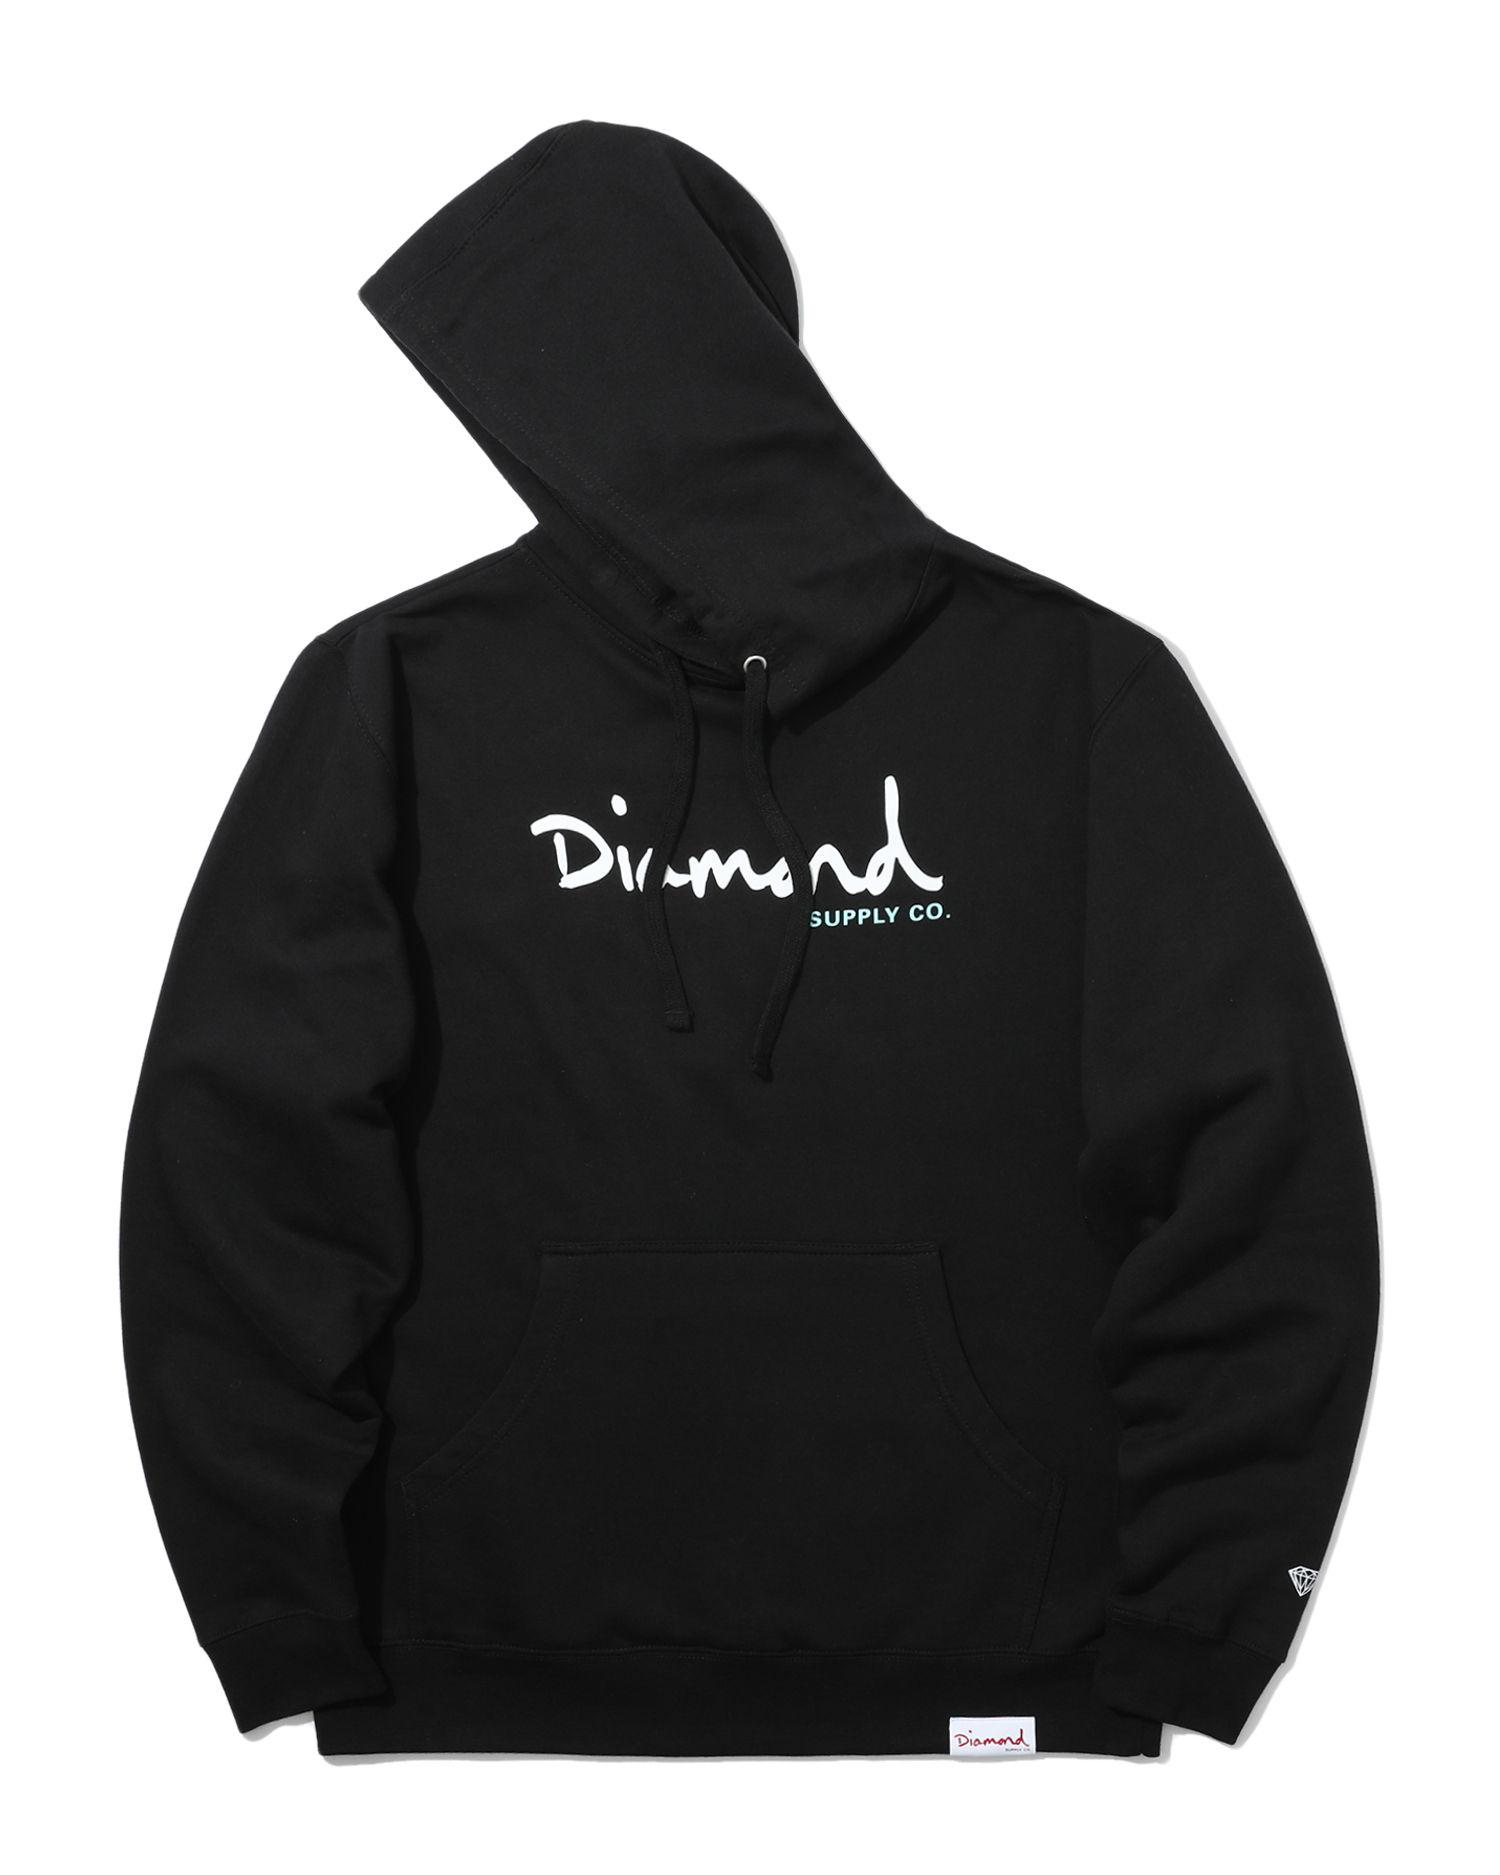 Shimmer OG Script hoodie by DIAMOND SUPPLY CO.